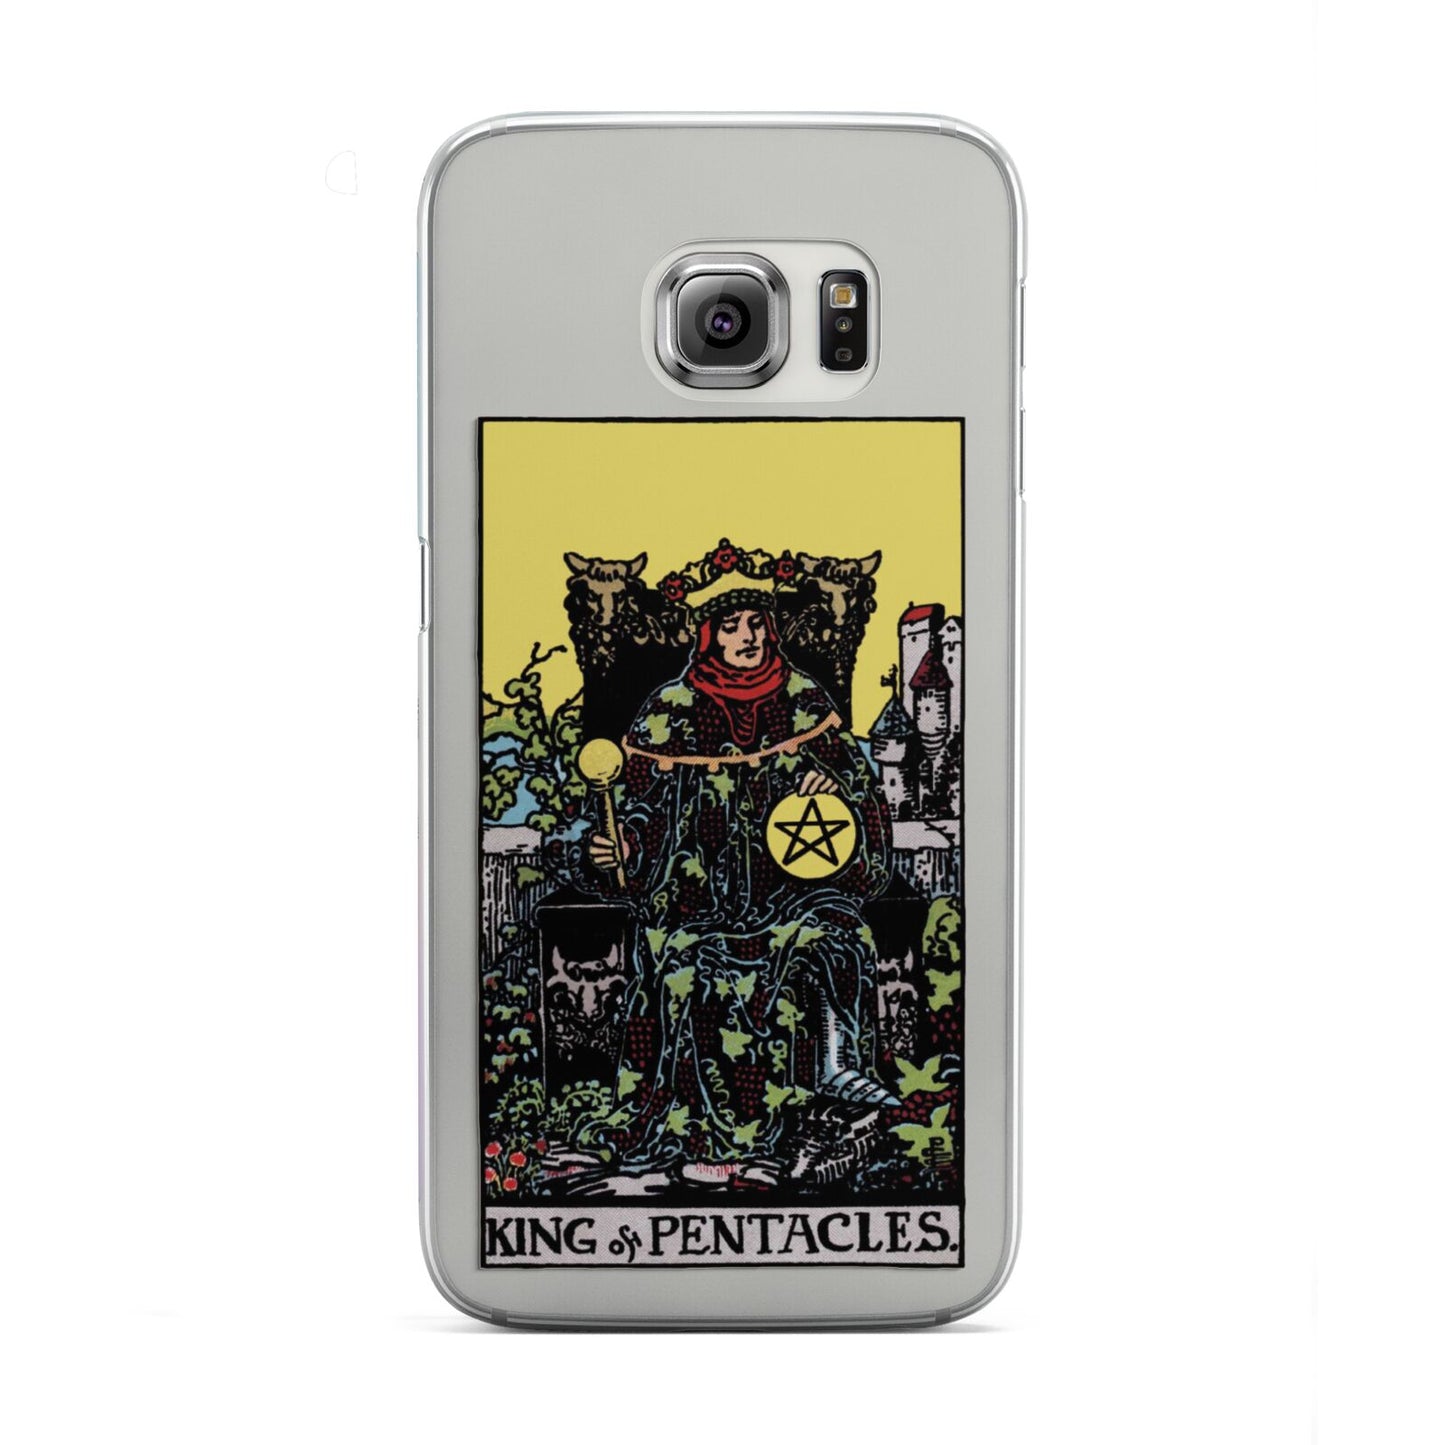 King of Pentacles Tarot Card Samsung Galaxy S6 Edge Case